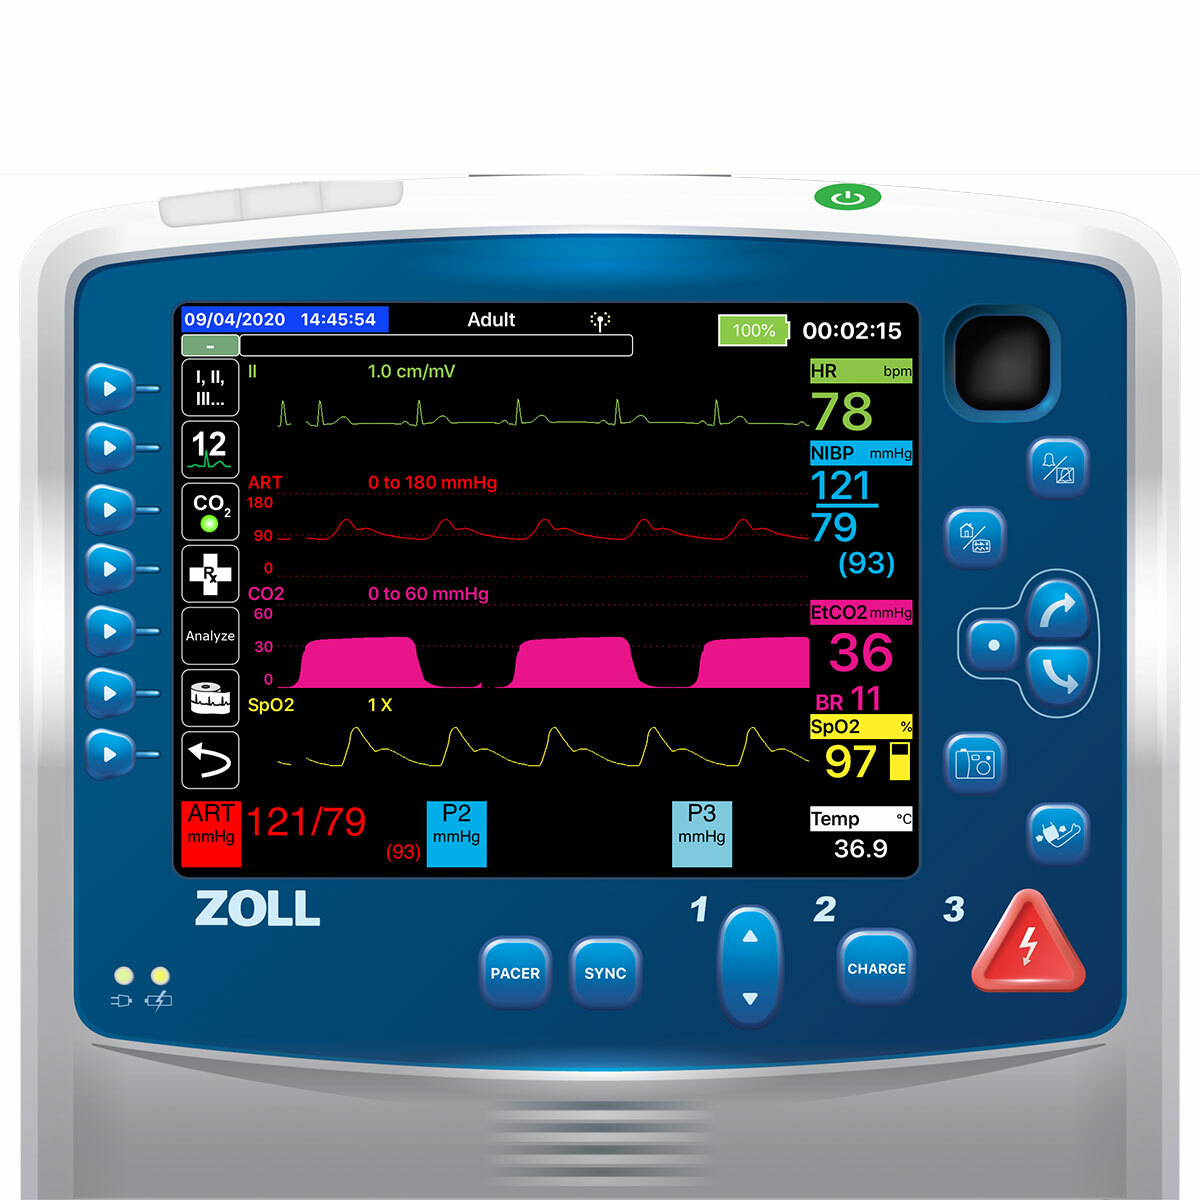 Simultor obrazovky pacientskho monitoru Zoll Propaq MD pro REALITi360